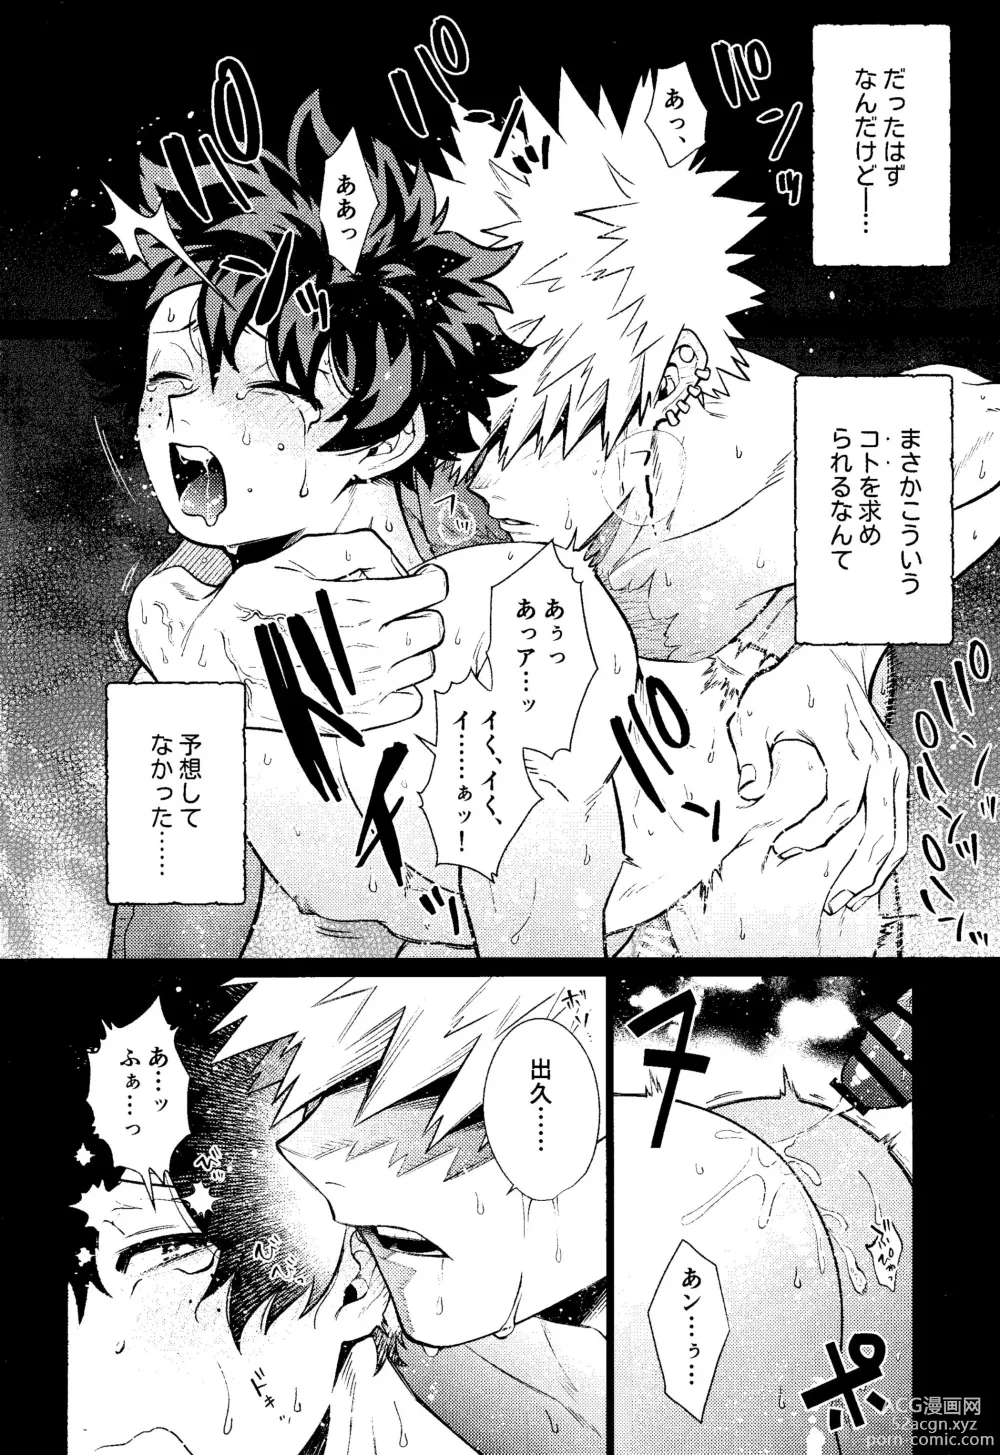 Page 7 of doujinshi Ubatte Nusumareru - Robbed and stolen